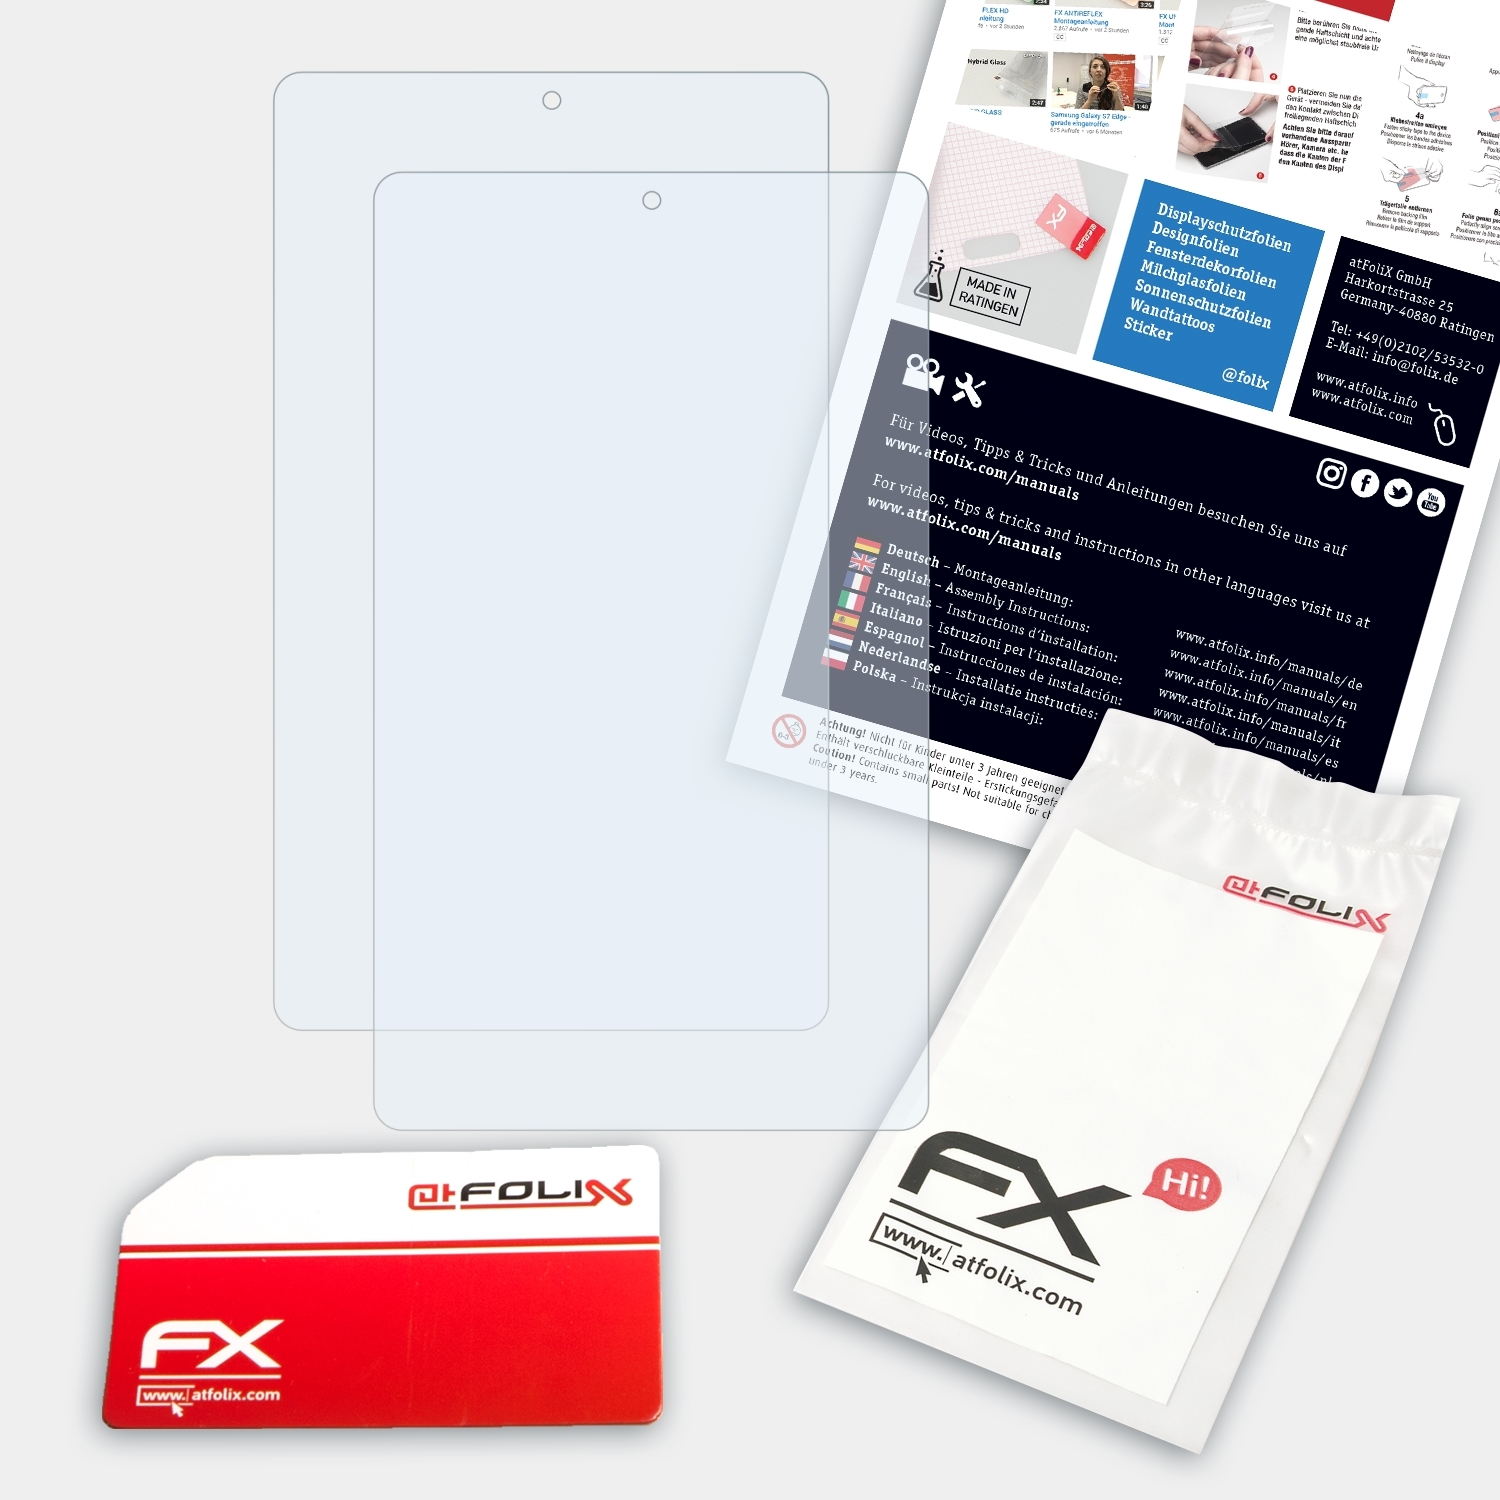 P80 Teclast FX-Clear ATFOLIX Displayschutz(für Pro) 2x